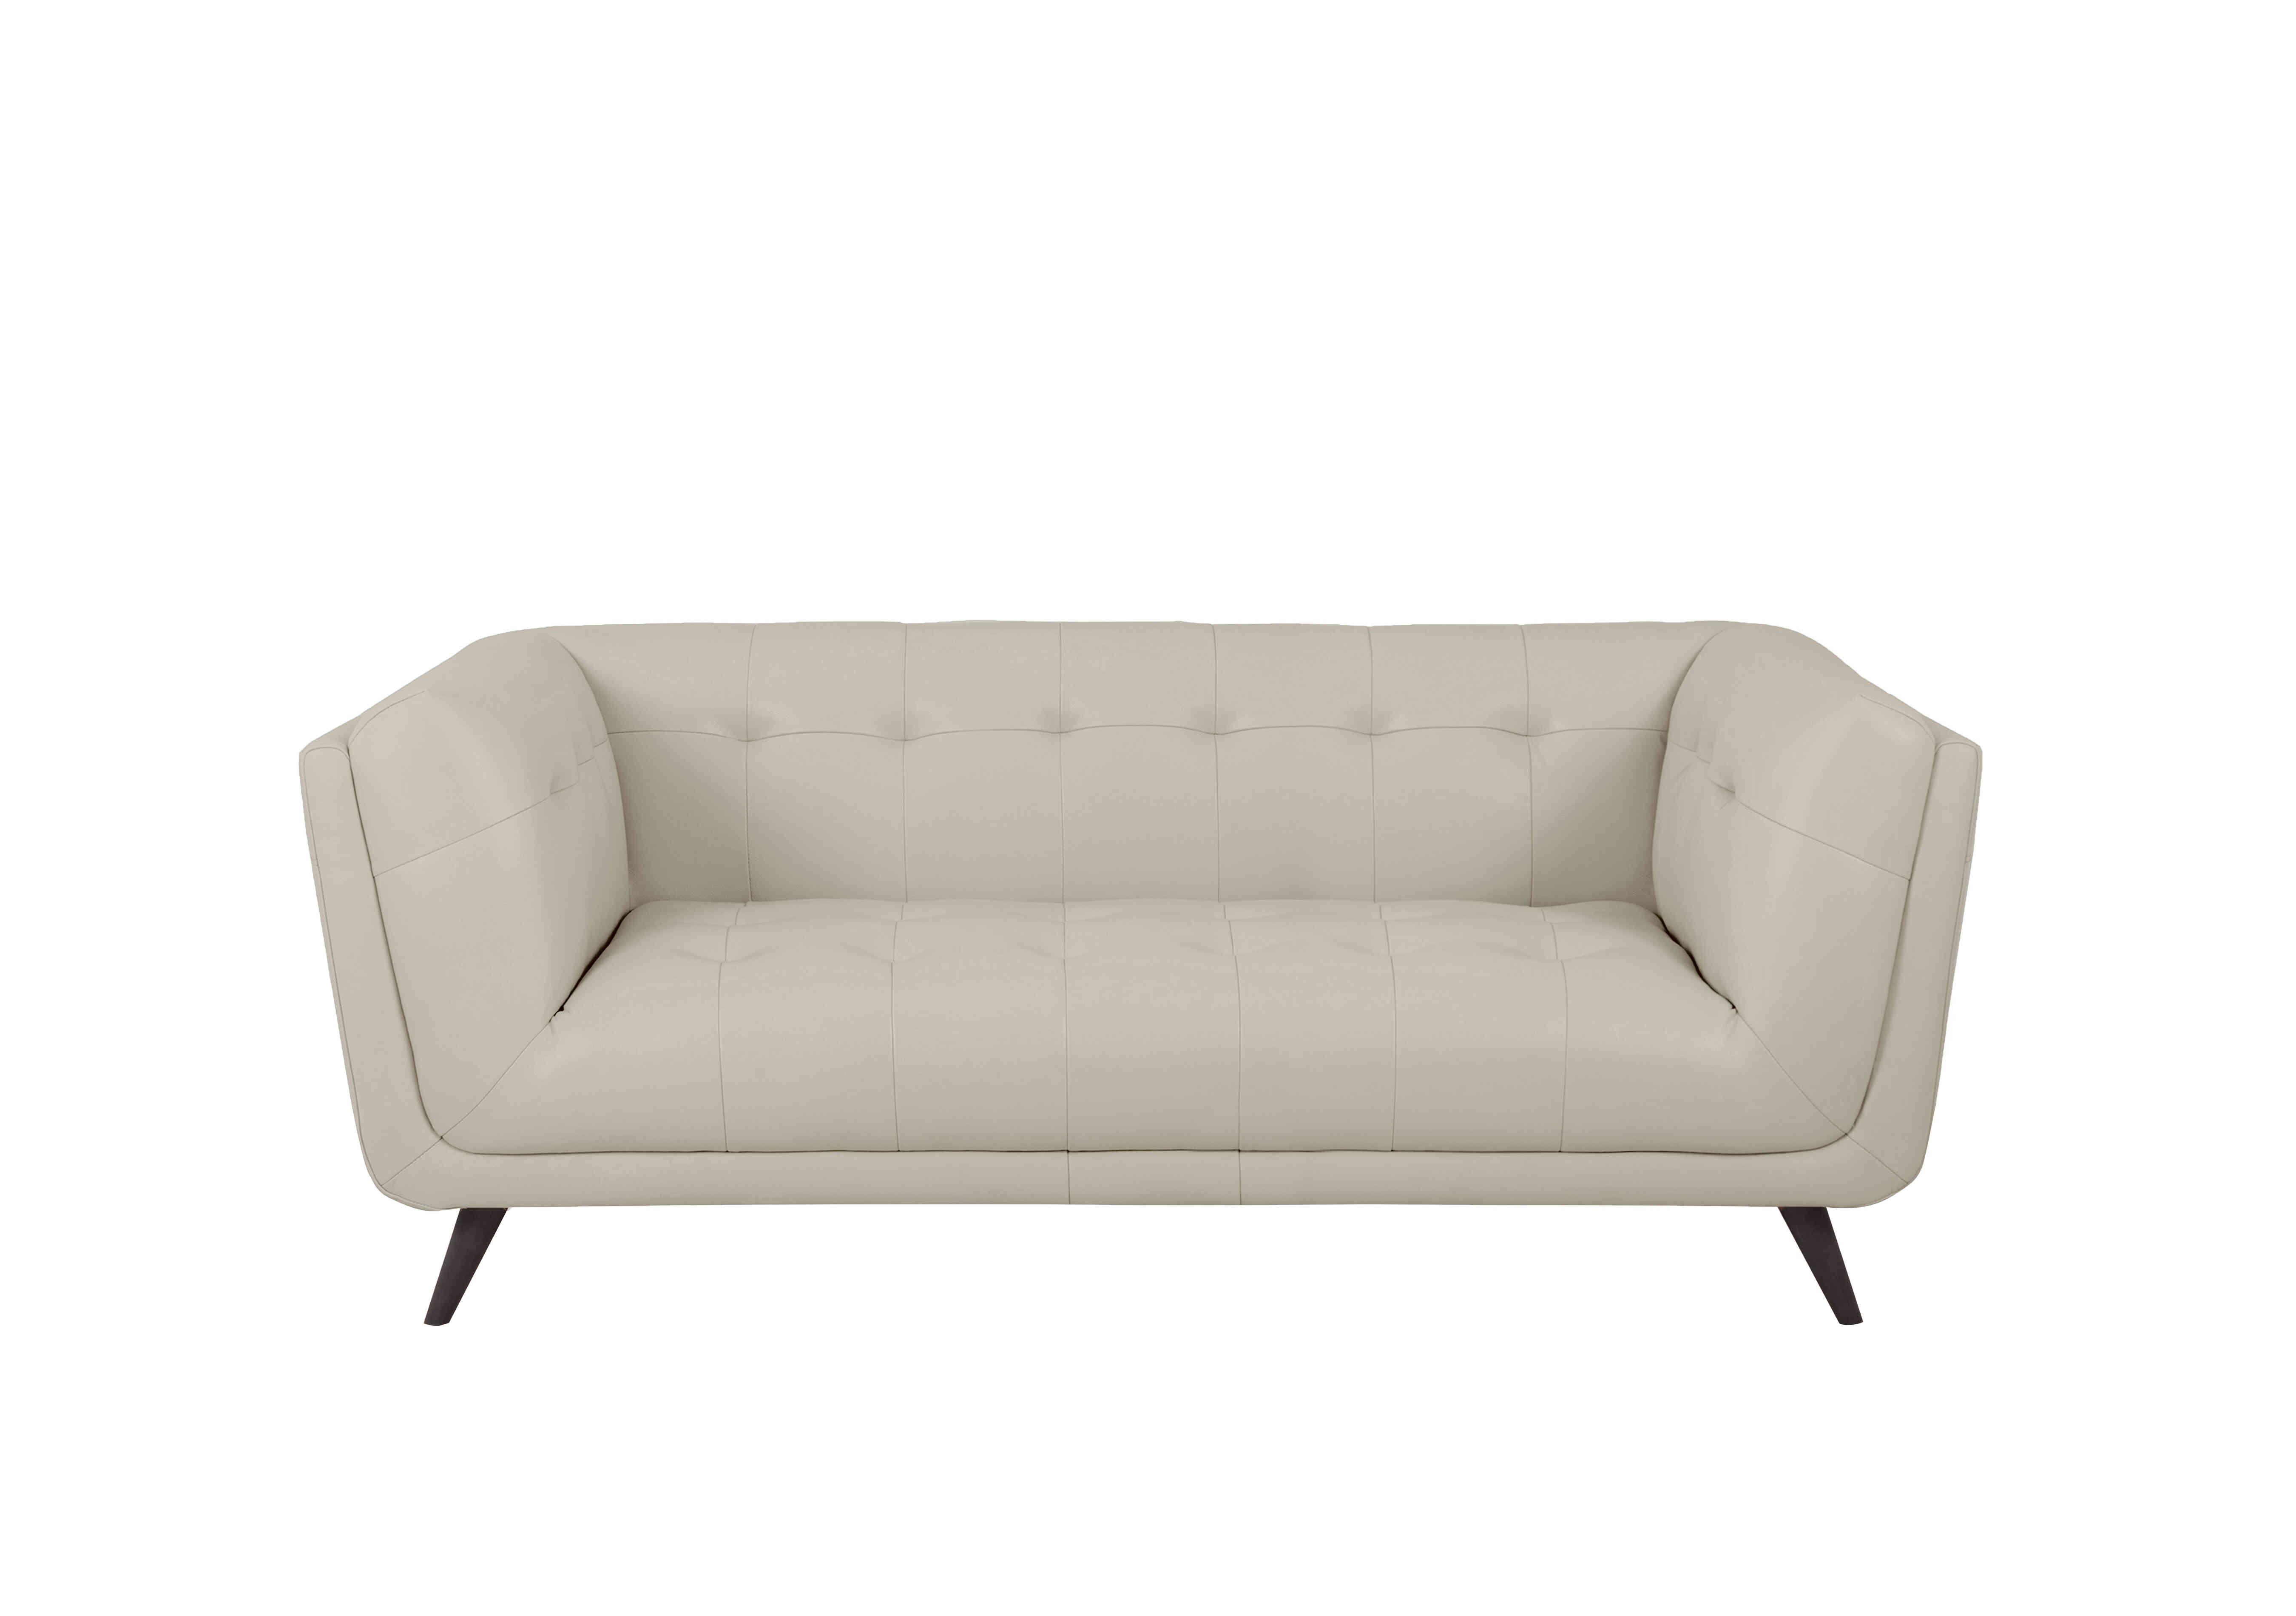 Rene Large 2 Seater Leather Sofa in Florida Lead Grey on Furniture Village